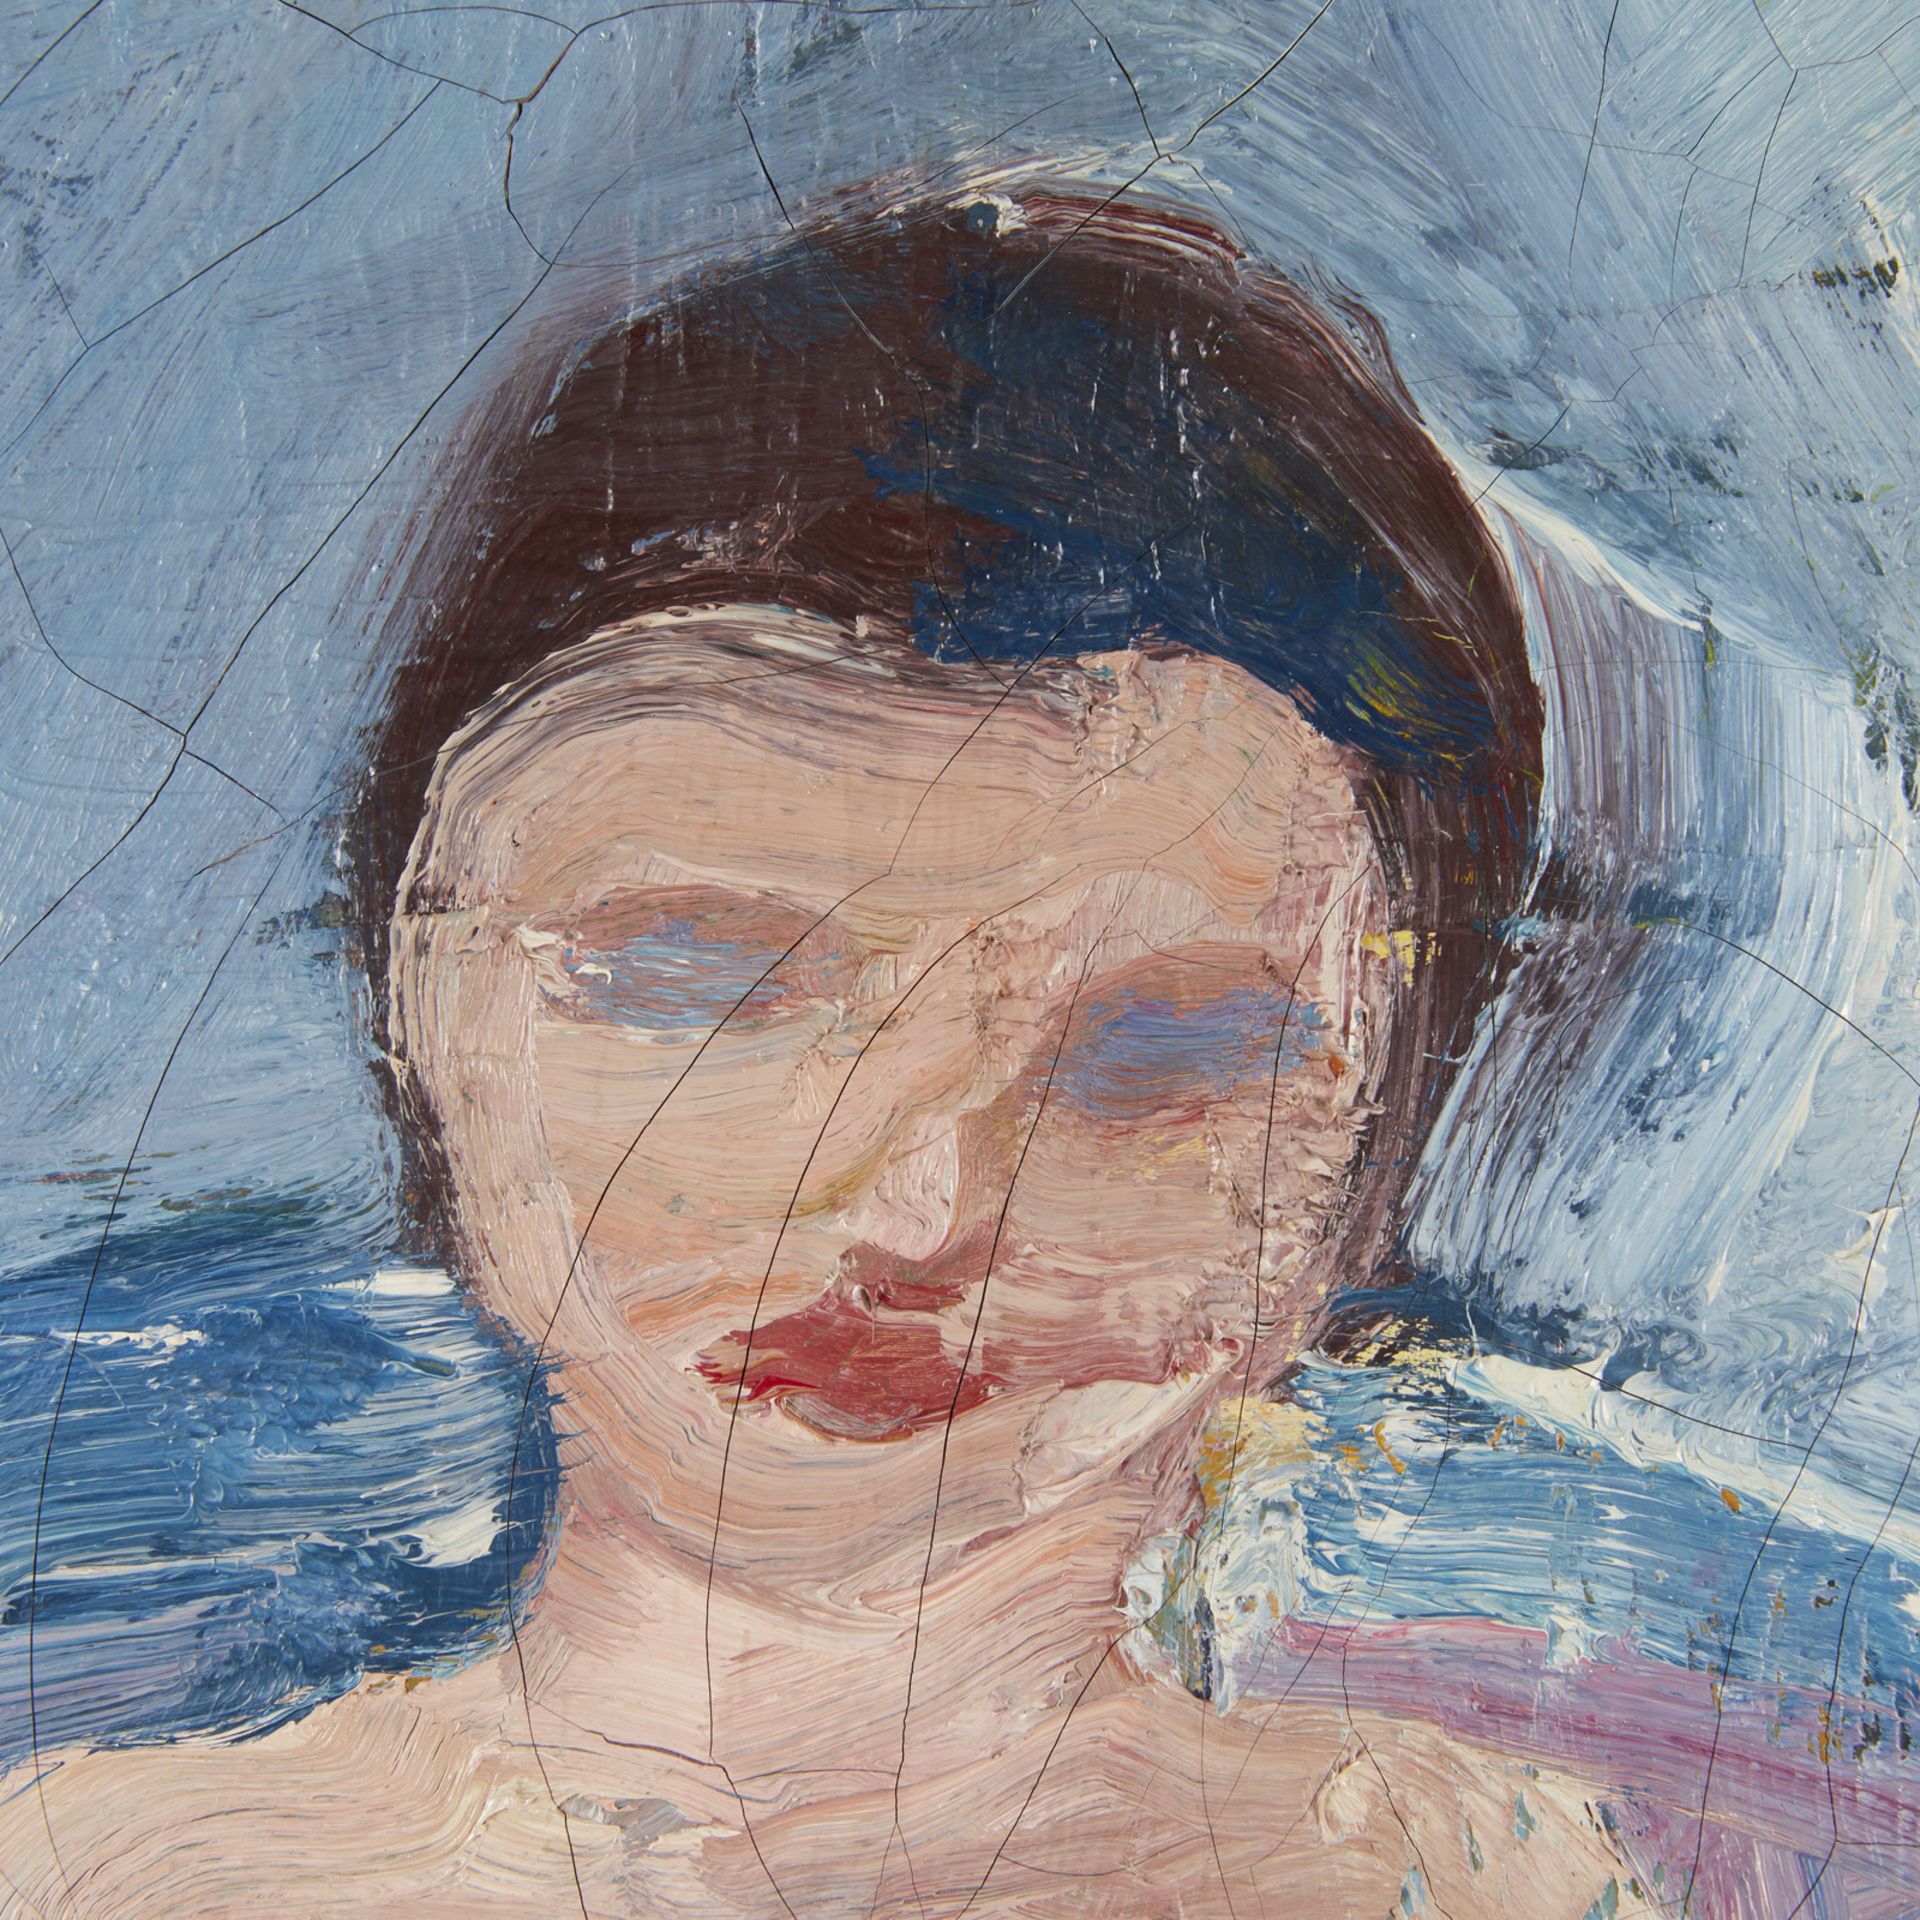 Richard Diebenkorn "Reclining Nude II" Painting - Image 4 of 13